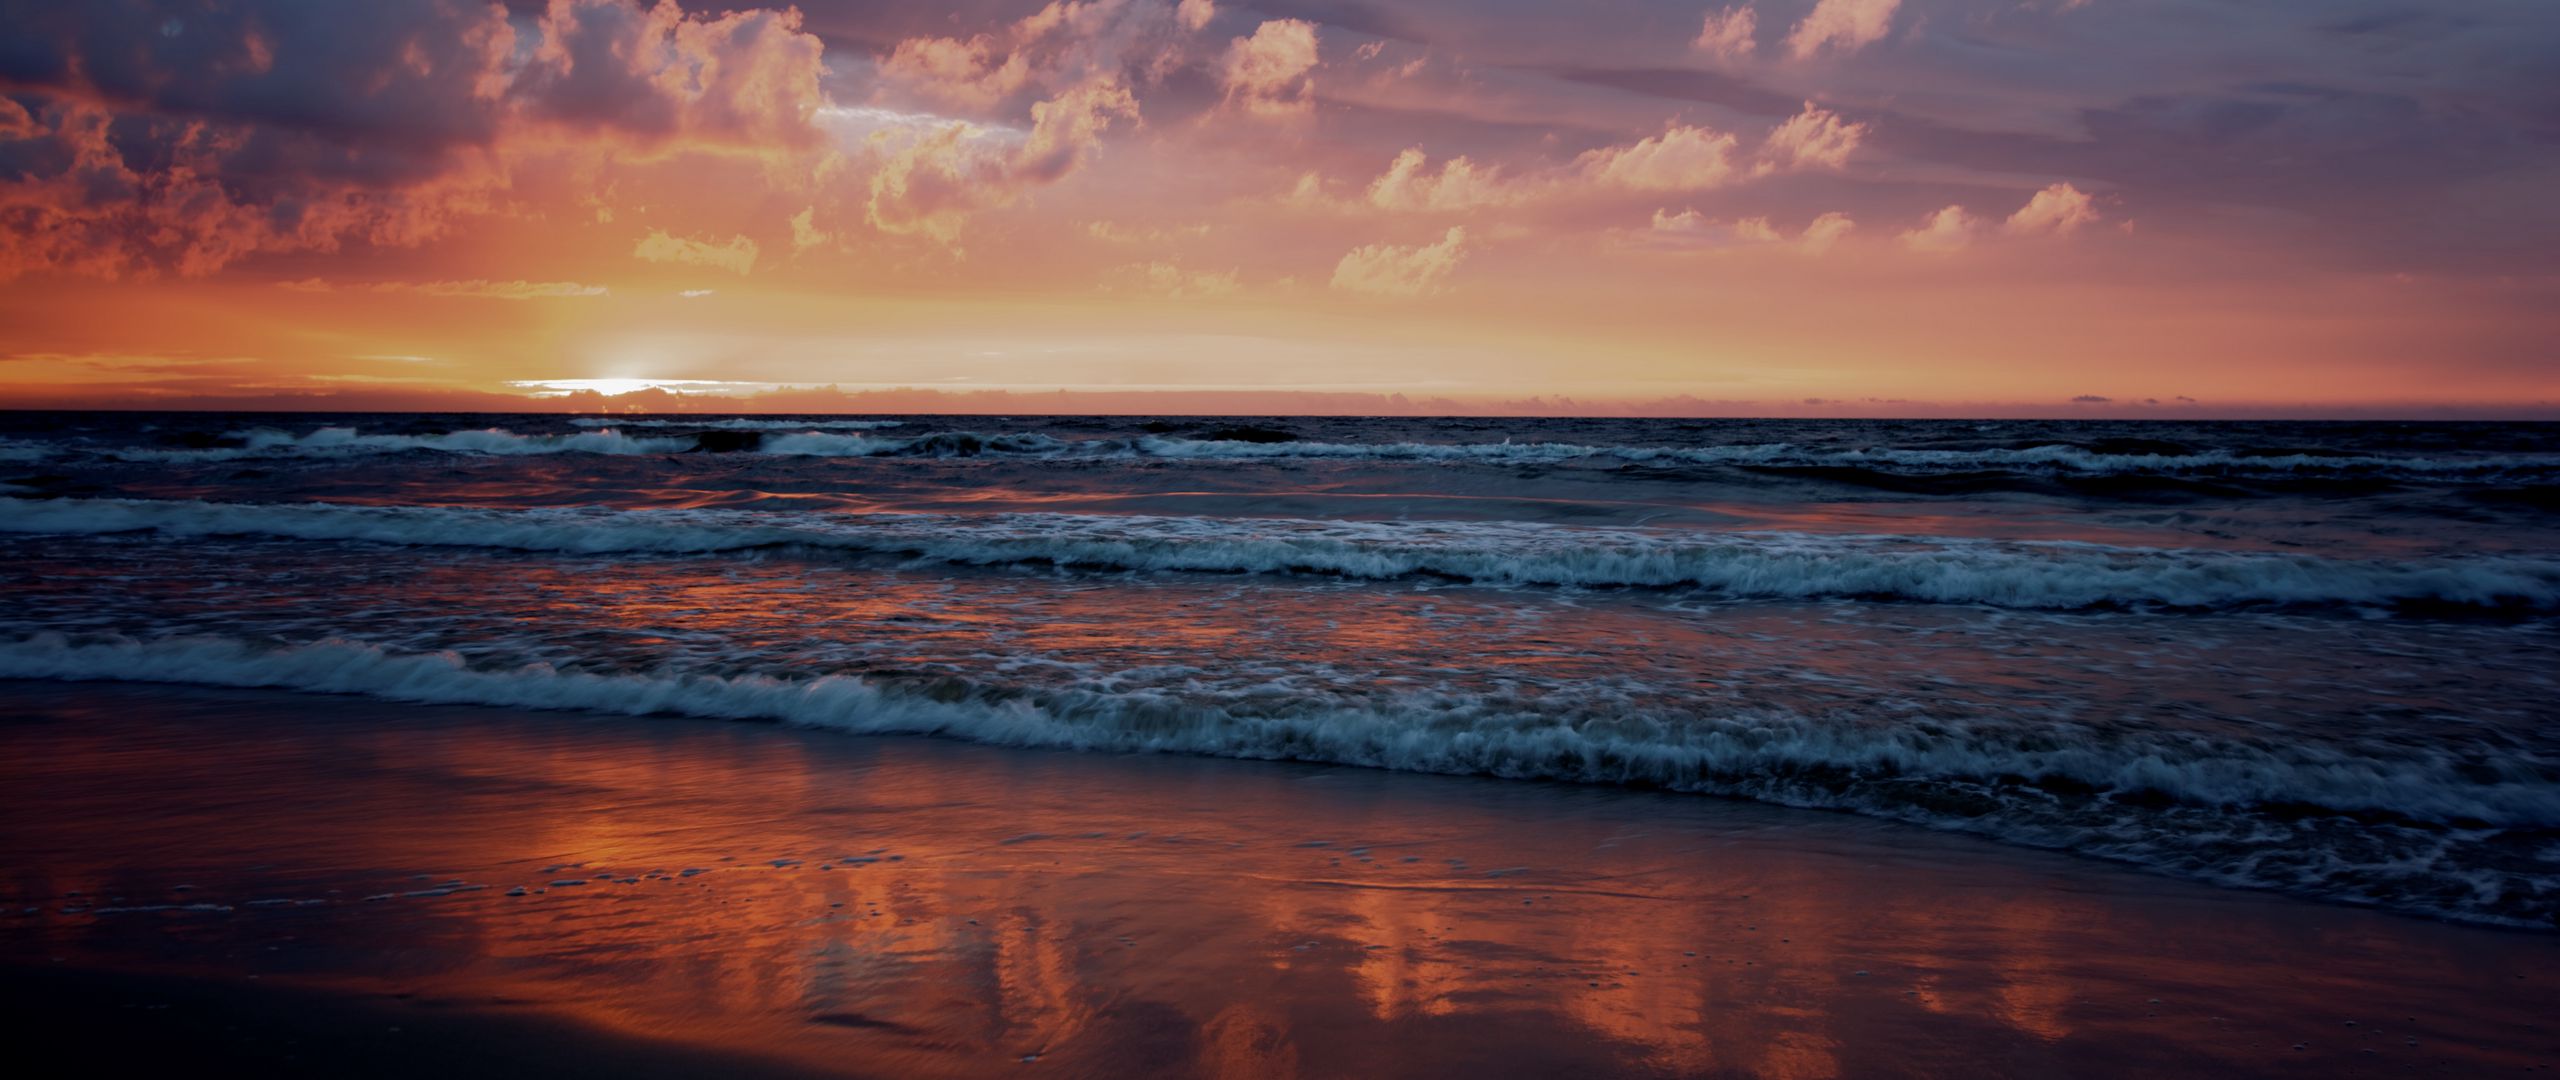 Download Wallpaper 2560x1080 Sunset Sea Horizon Beach Dual Wide